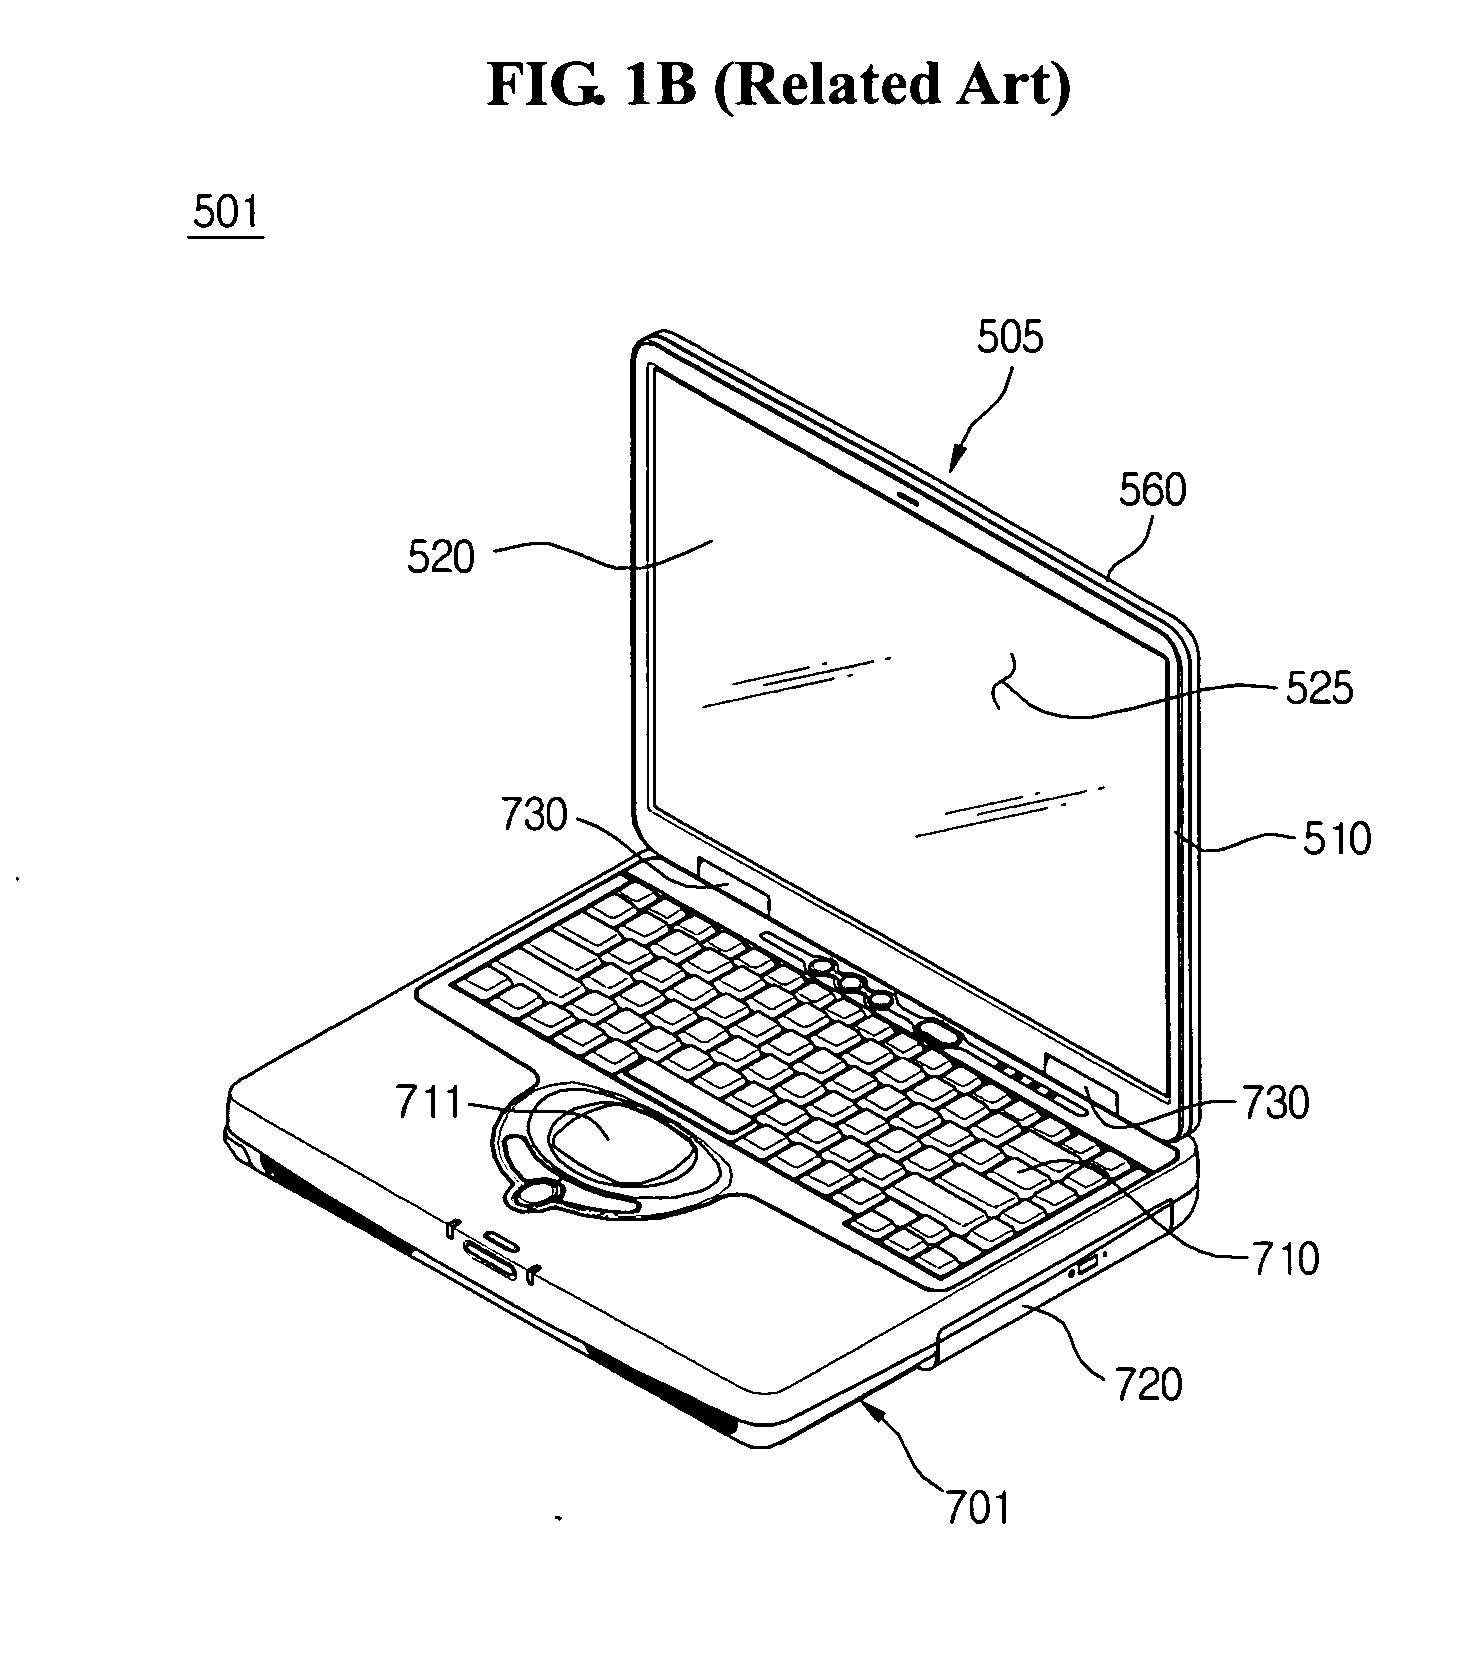 Liquid crystal display device and portable computer having the same